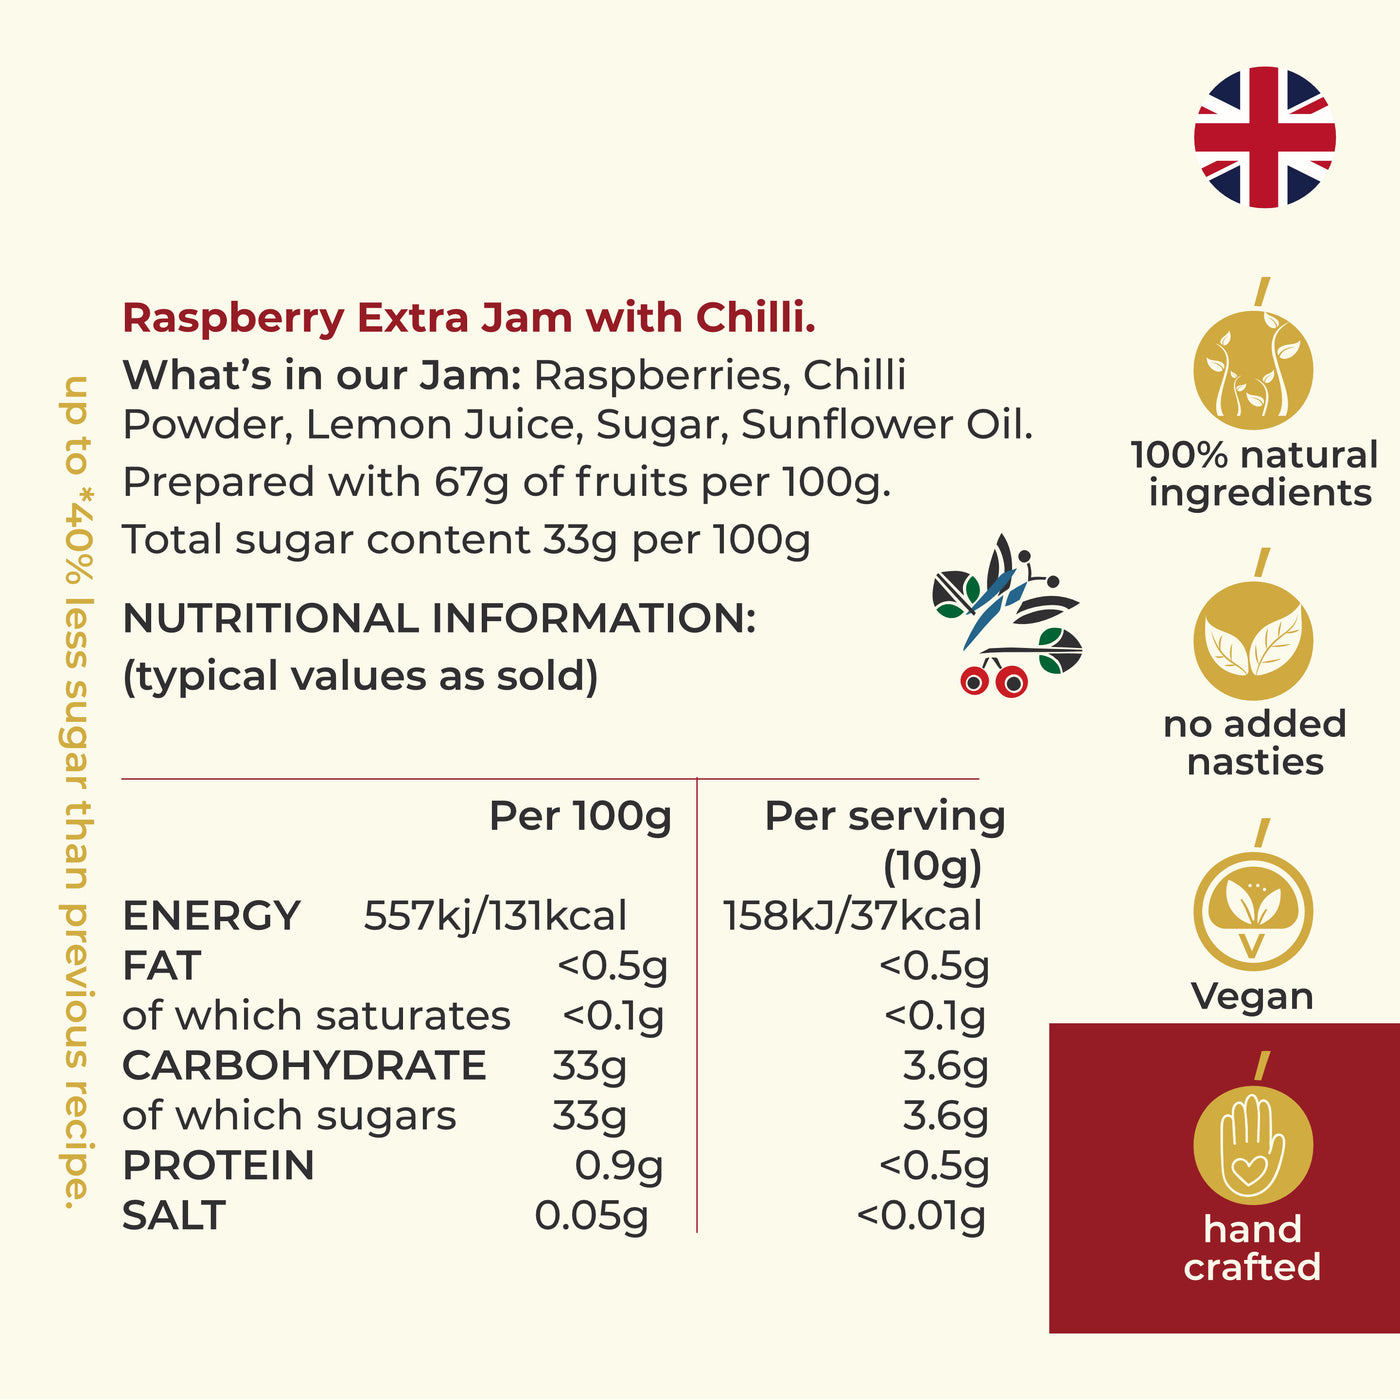 Gourmet Raspberry & Chilli Jam - More Fruits, Less Sugar